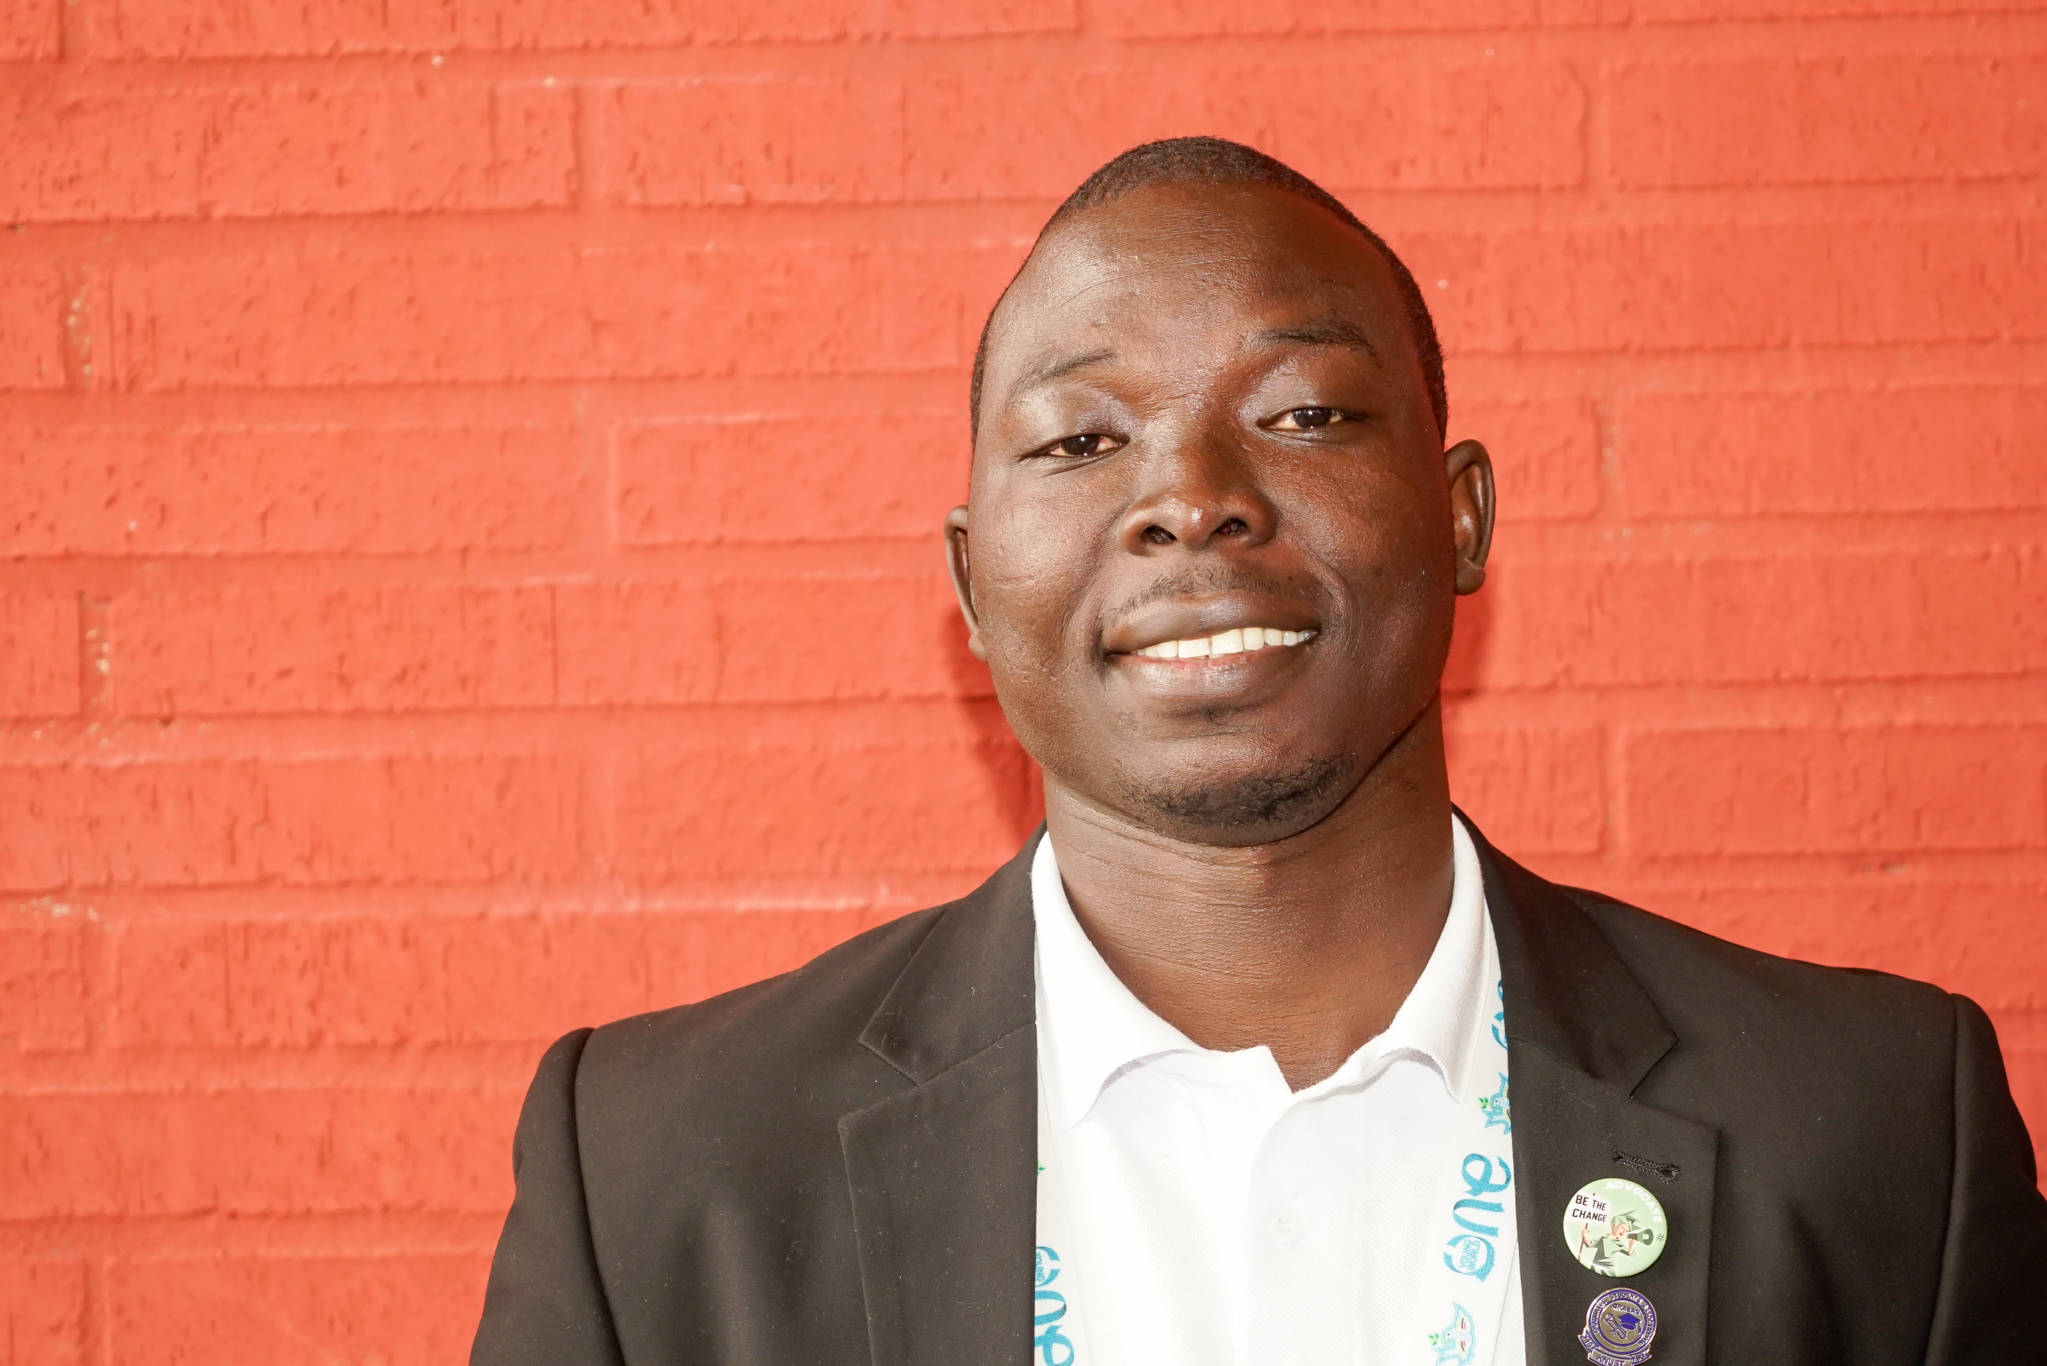 Schandorf Adu Bright (29) from Ghana is Director of Farmer Services at Farmerline.